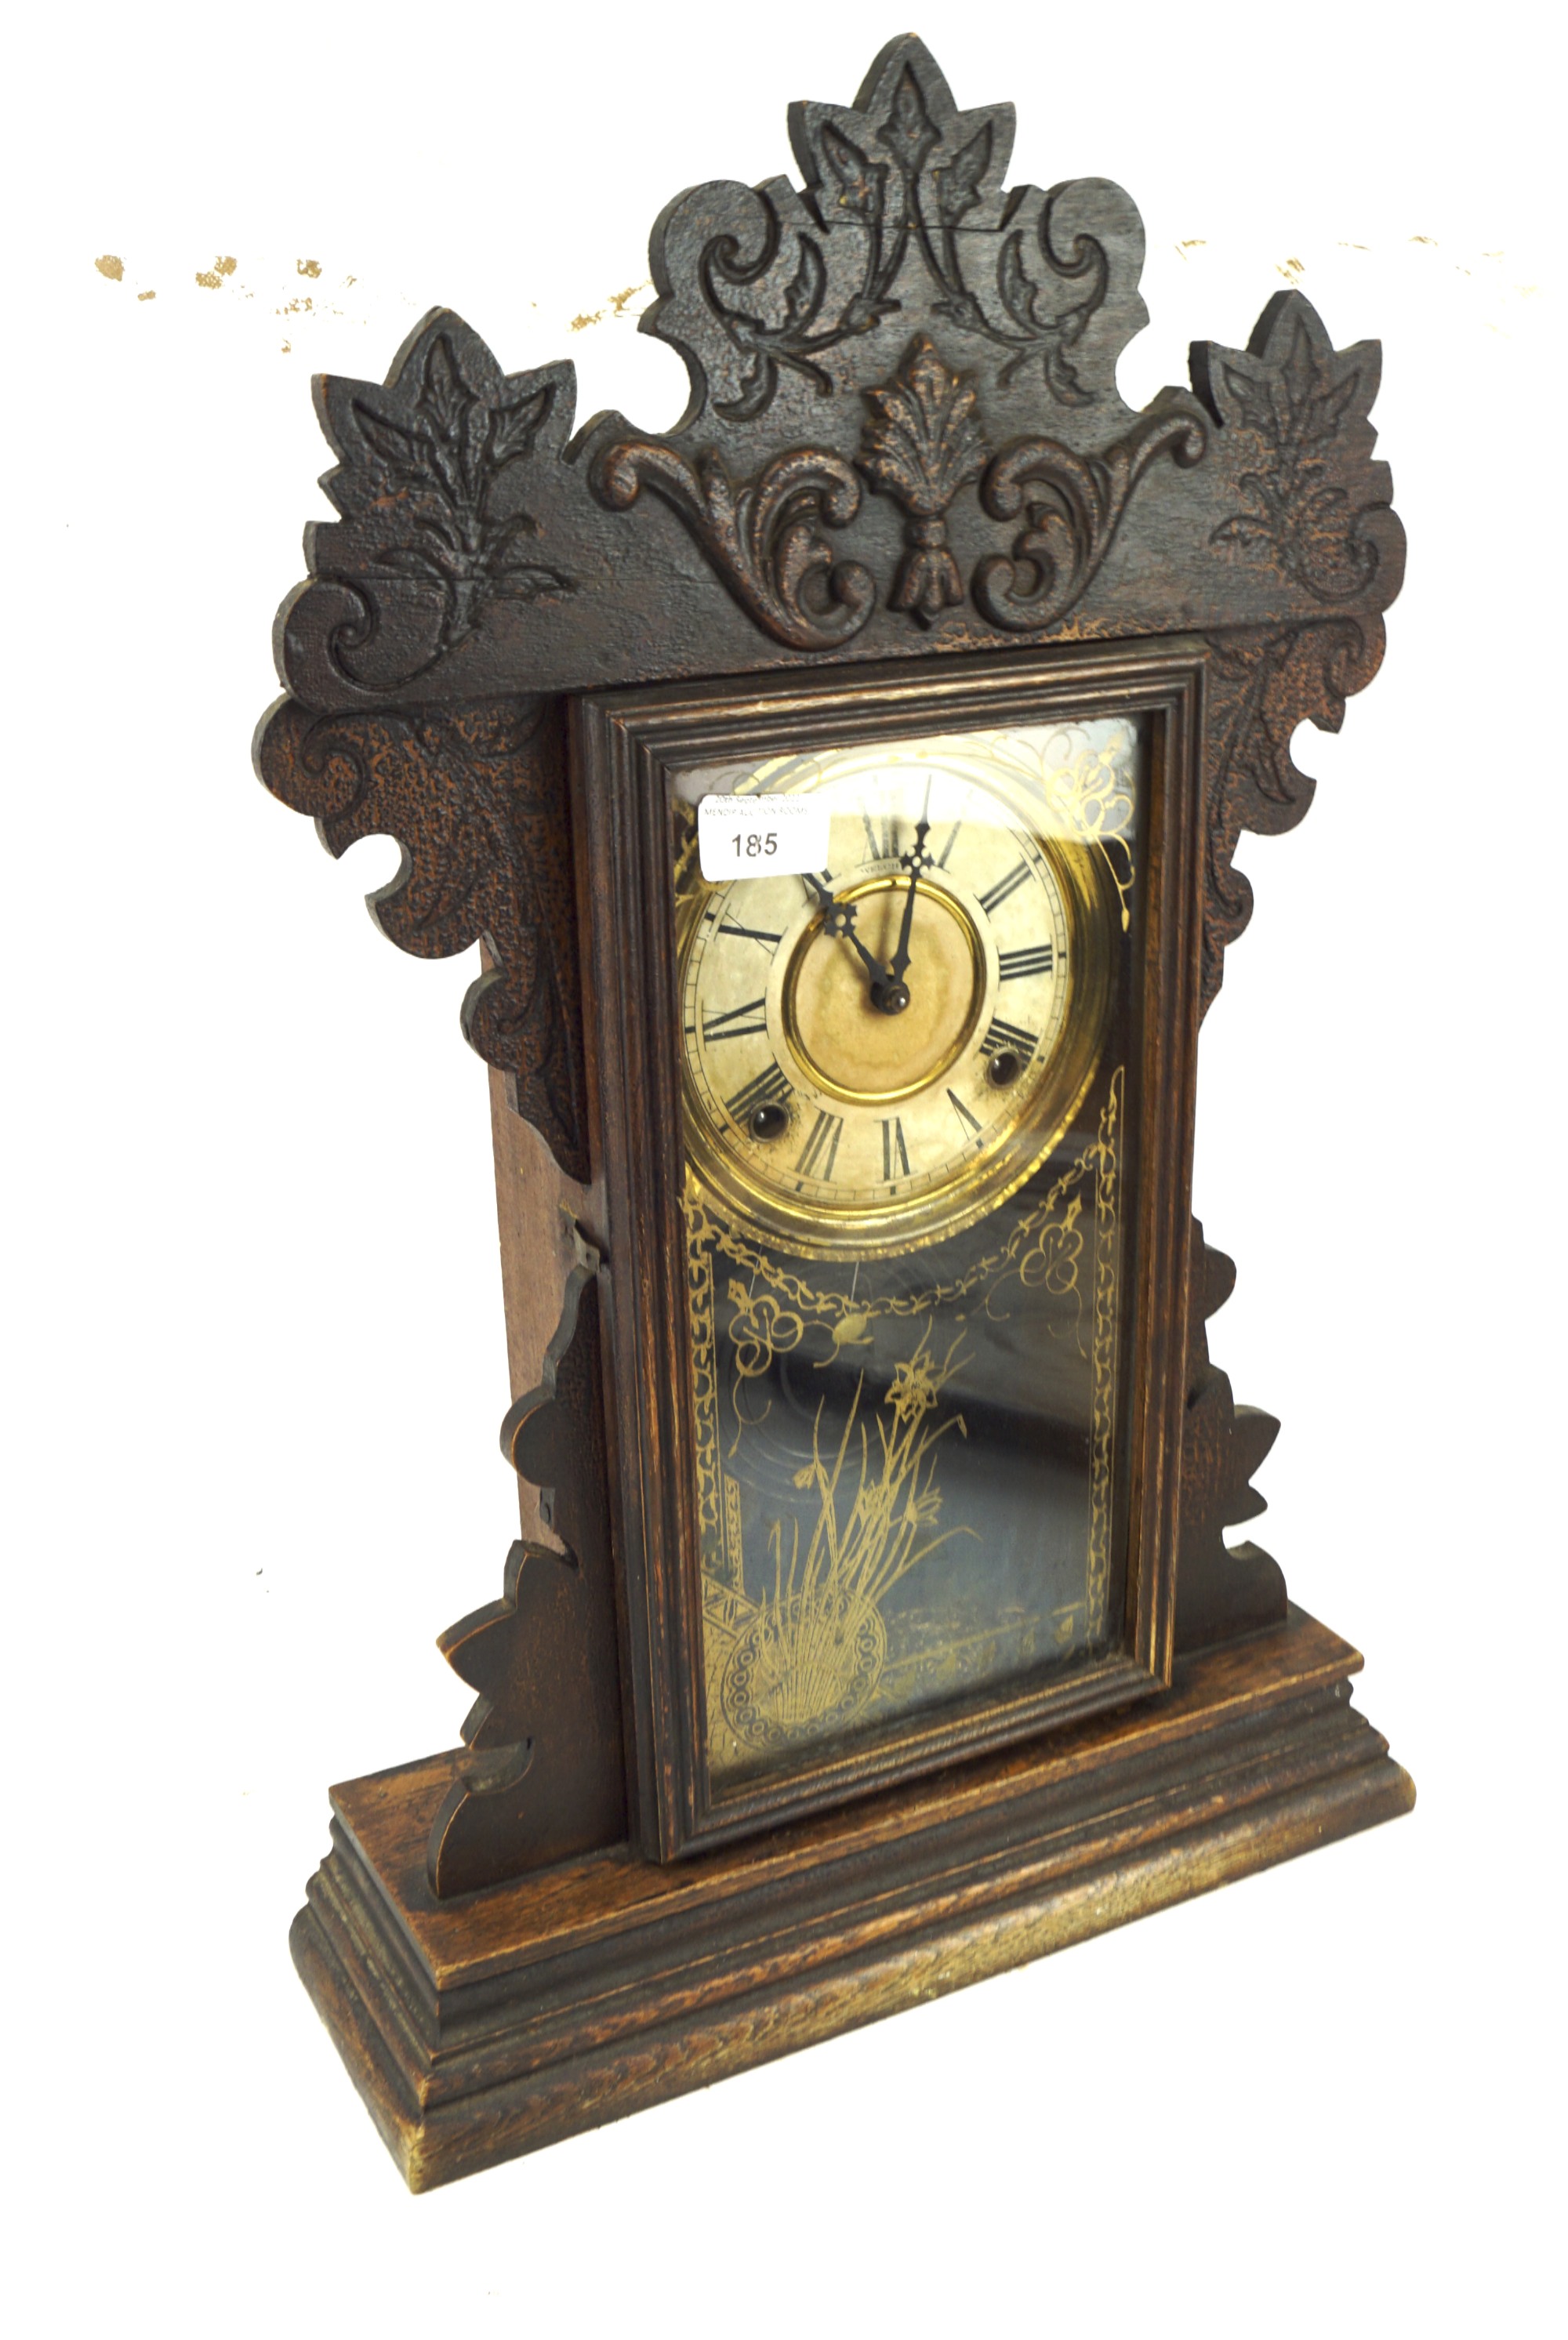 An American Forestville Conneticut mantel clock. - Image 2 of 2